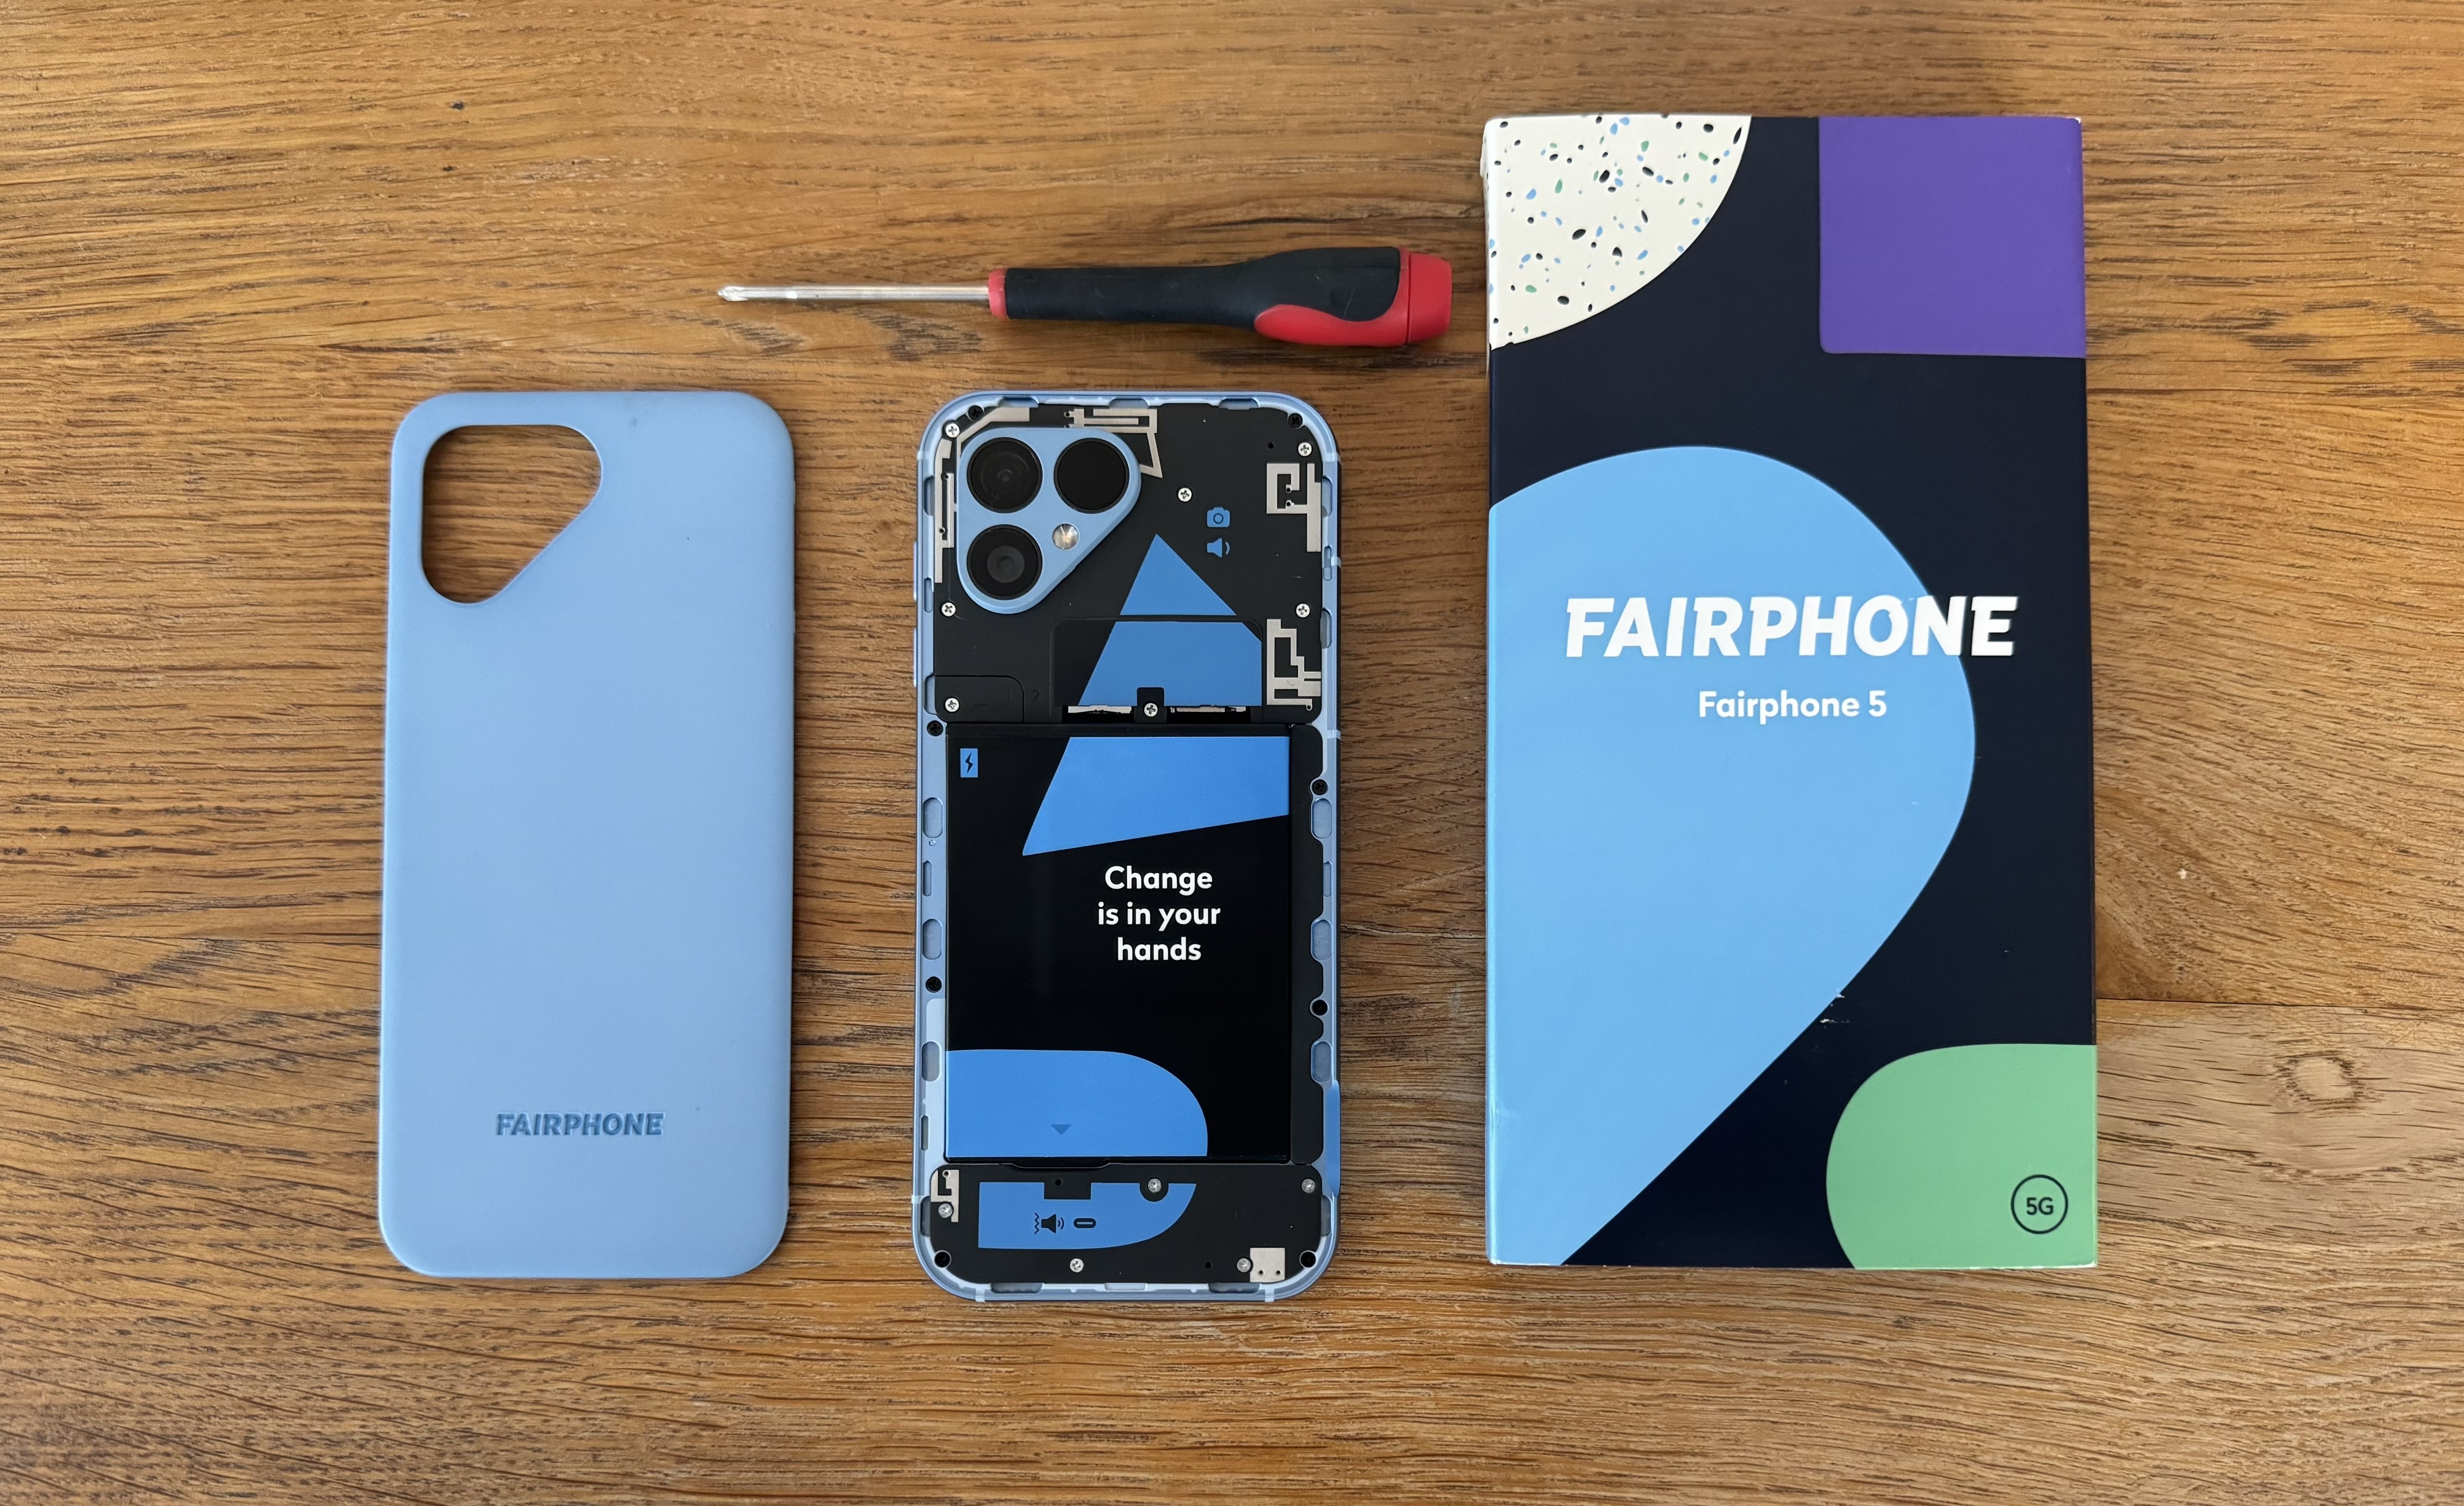 5 Test Fairphone Fairphone Smartphone